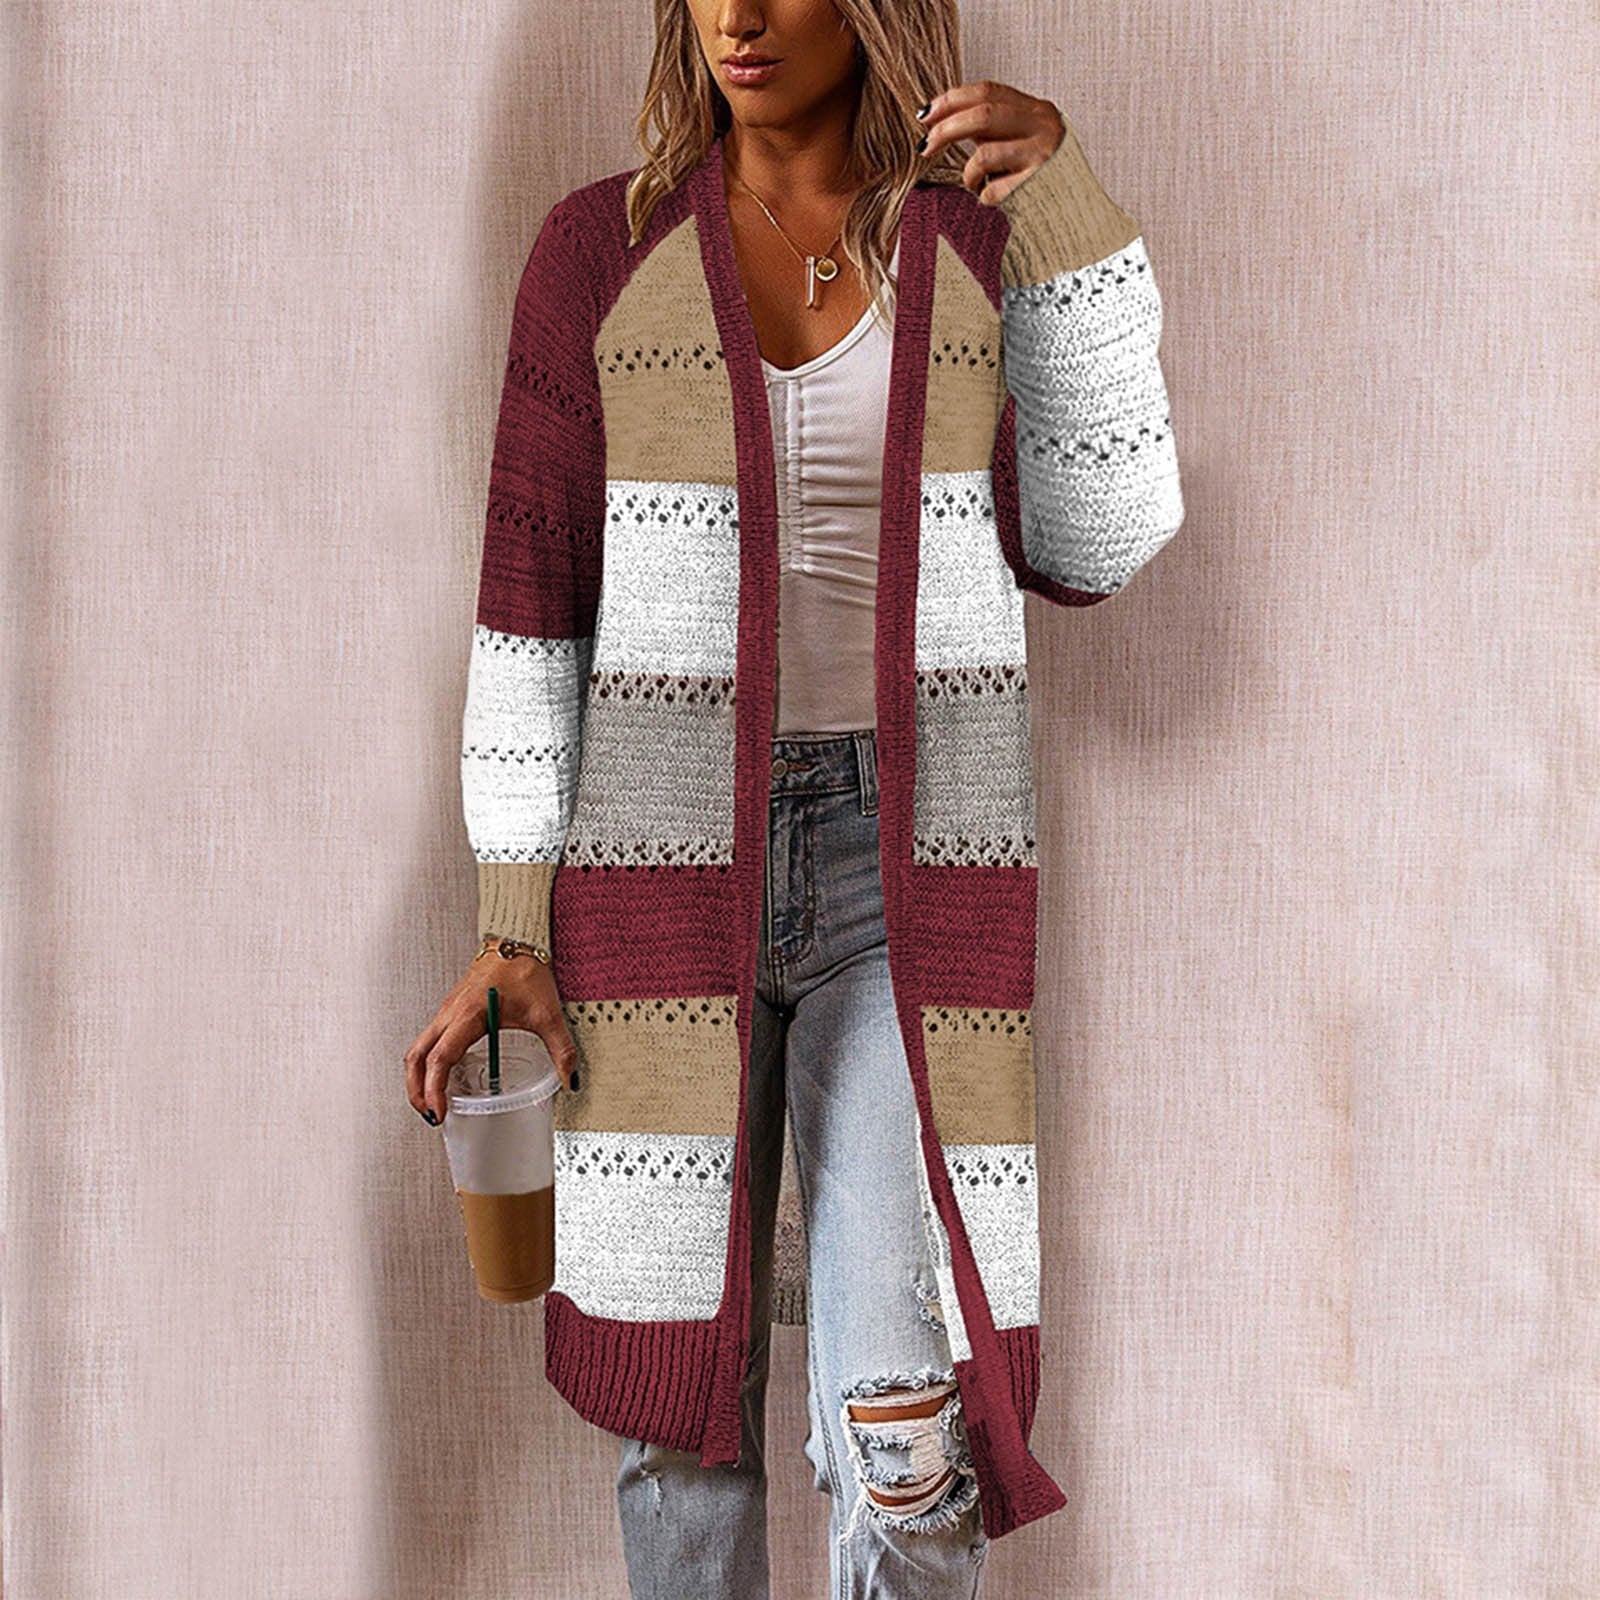 Women's Autumn and Winter Mid Length Striped Pocket Cardigan Stylish Knit